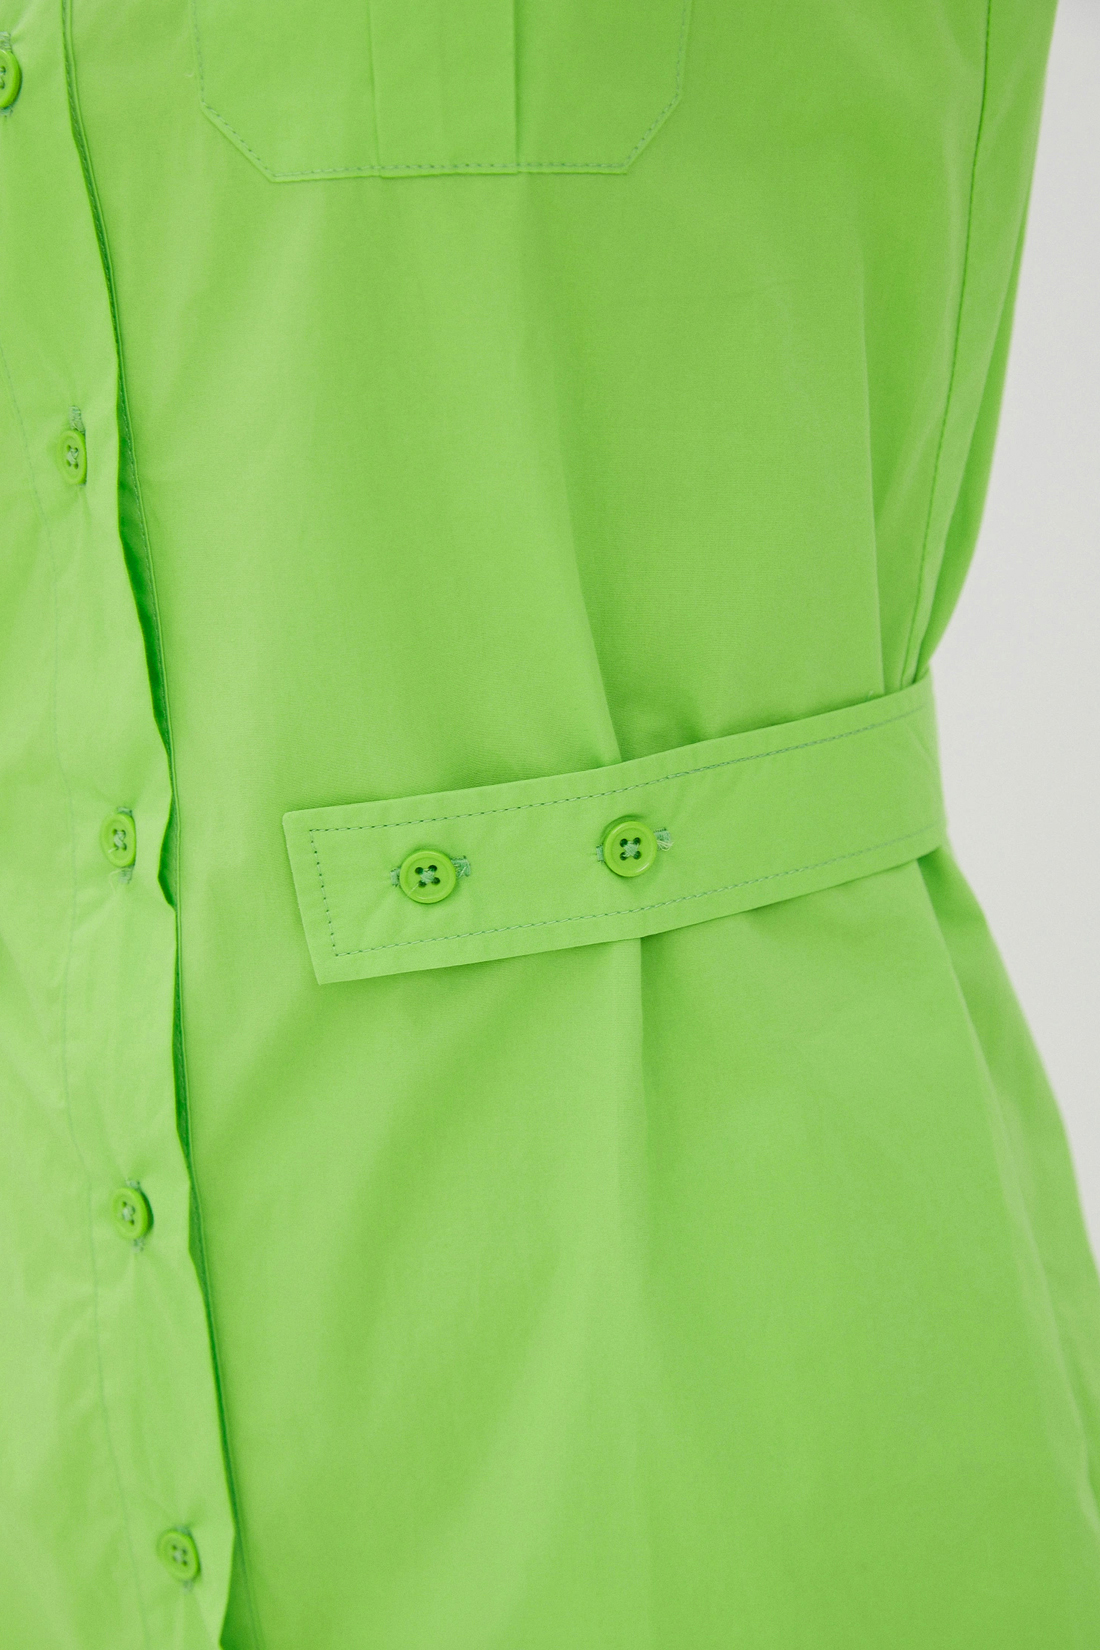 Платье-рубашка без рукавов (арт. baon B450059), размер M, цвет зеленый Платье-рубашка без рукавов (арт. baon B450059) - фото 3